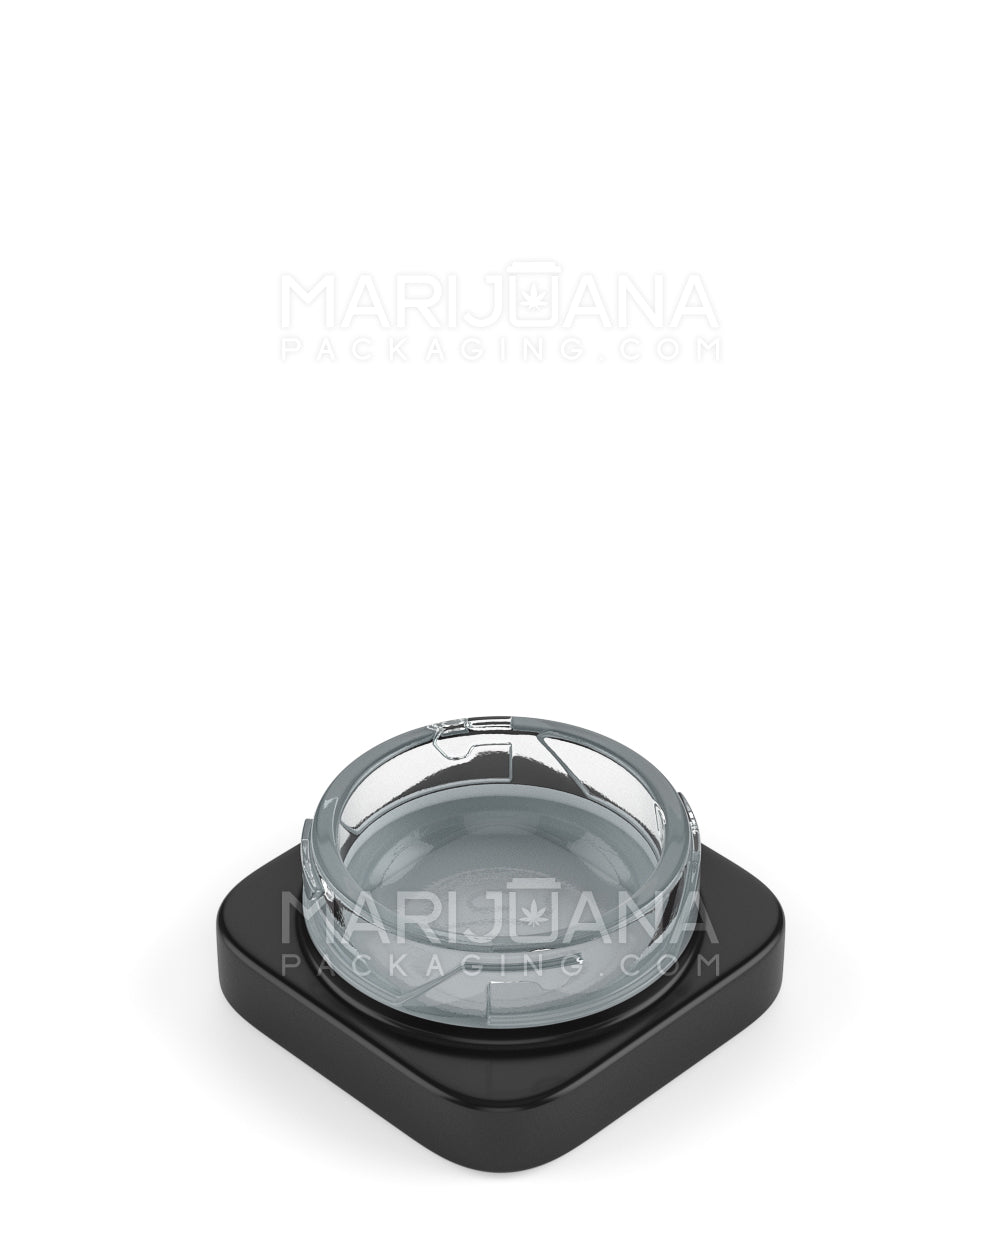 Child Resistant | Qube Black Glass Concentrate Jar w/ White Interior & Black Cap | 38mm - 9mL - 250 Count - 2